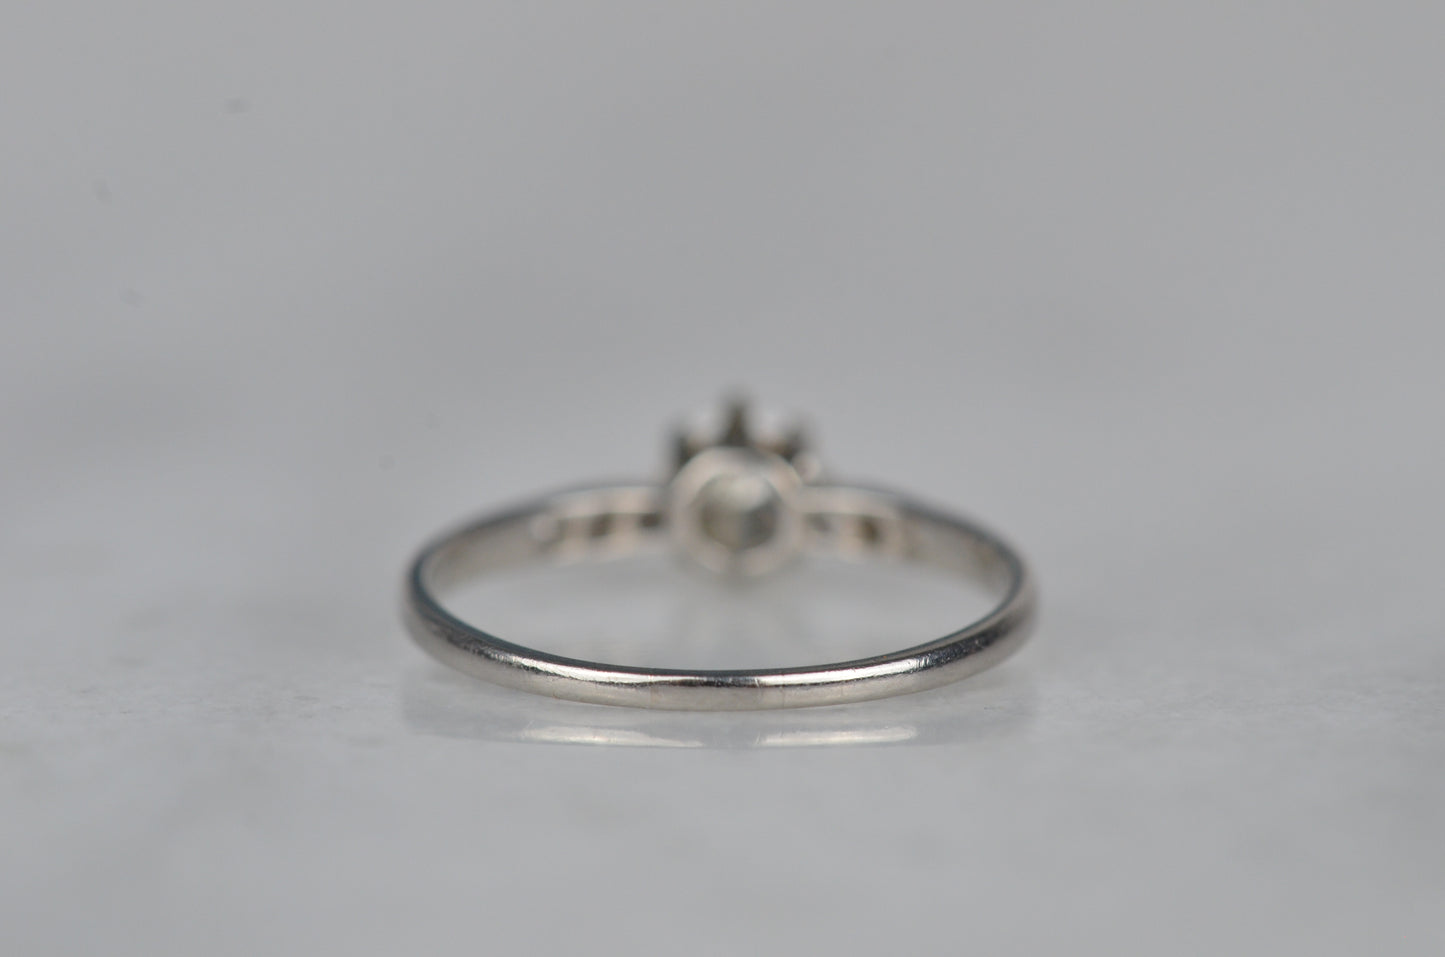 Daintiest Edwardian Engagement Ring